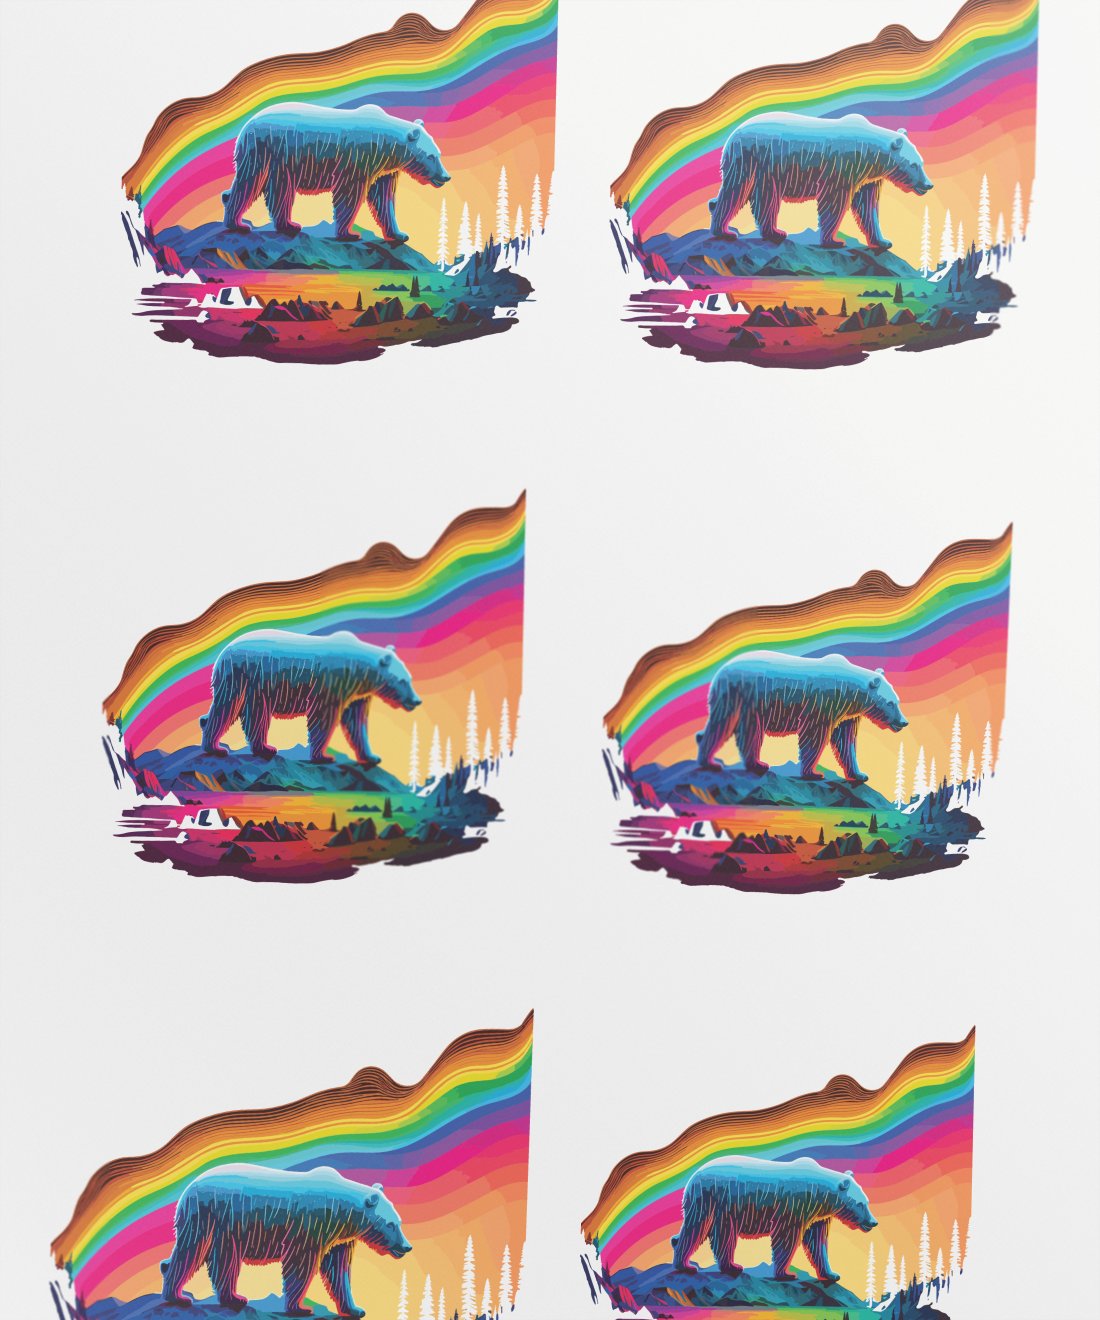 colorful-rainbow-bear-image1